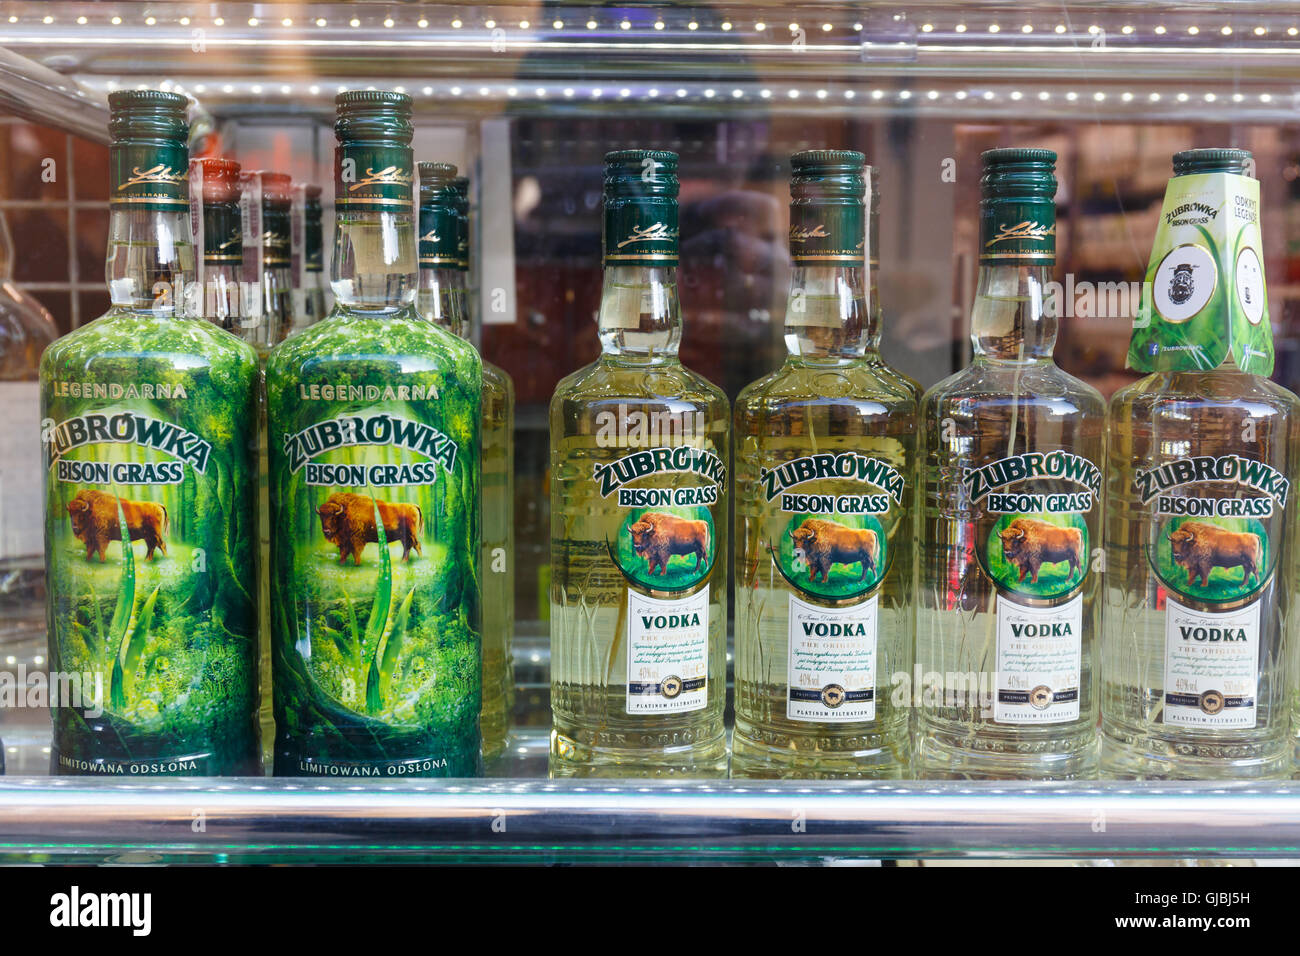 Krakow, Poland - November 02, 2014: Exhibition at the liquor store with Polish vodka in Krakow Stock Photo